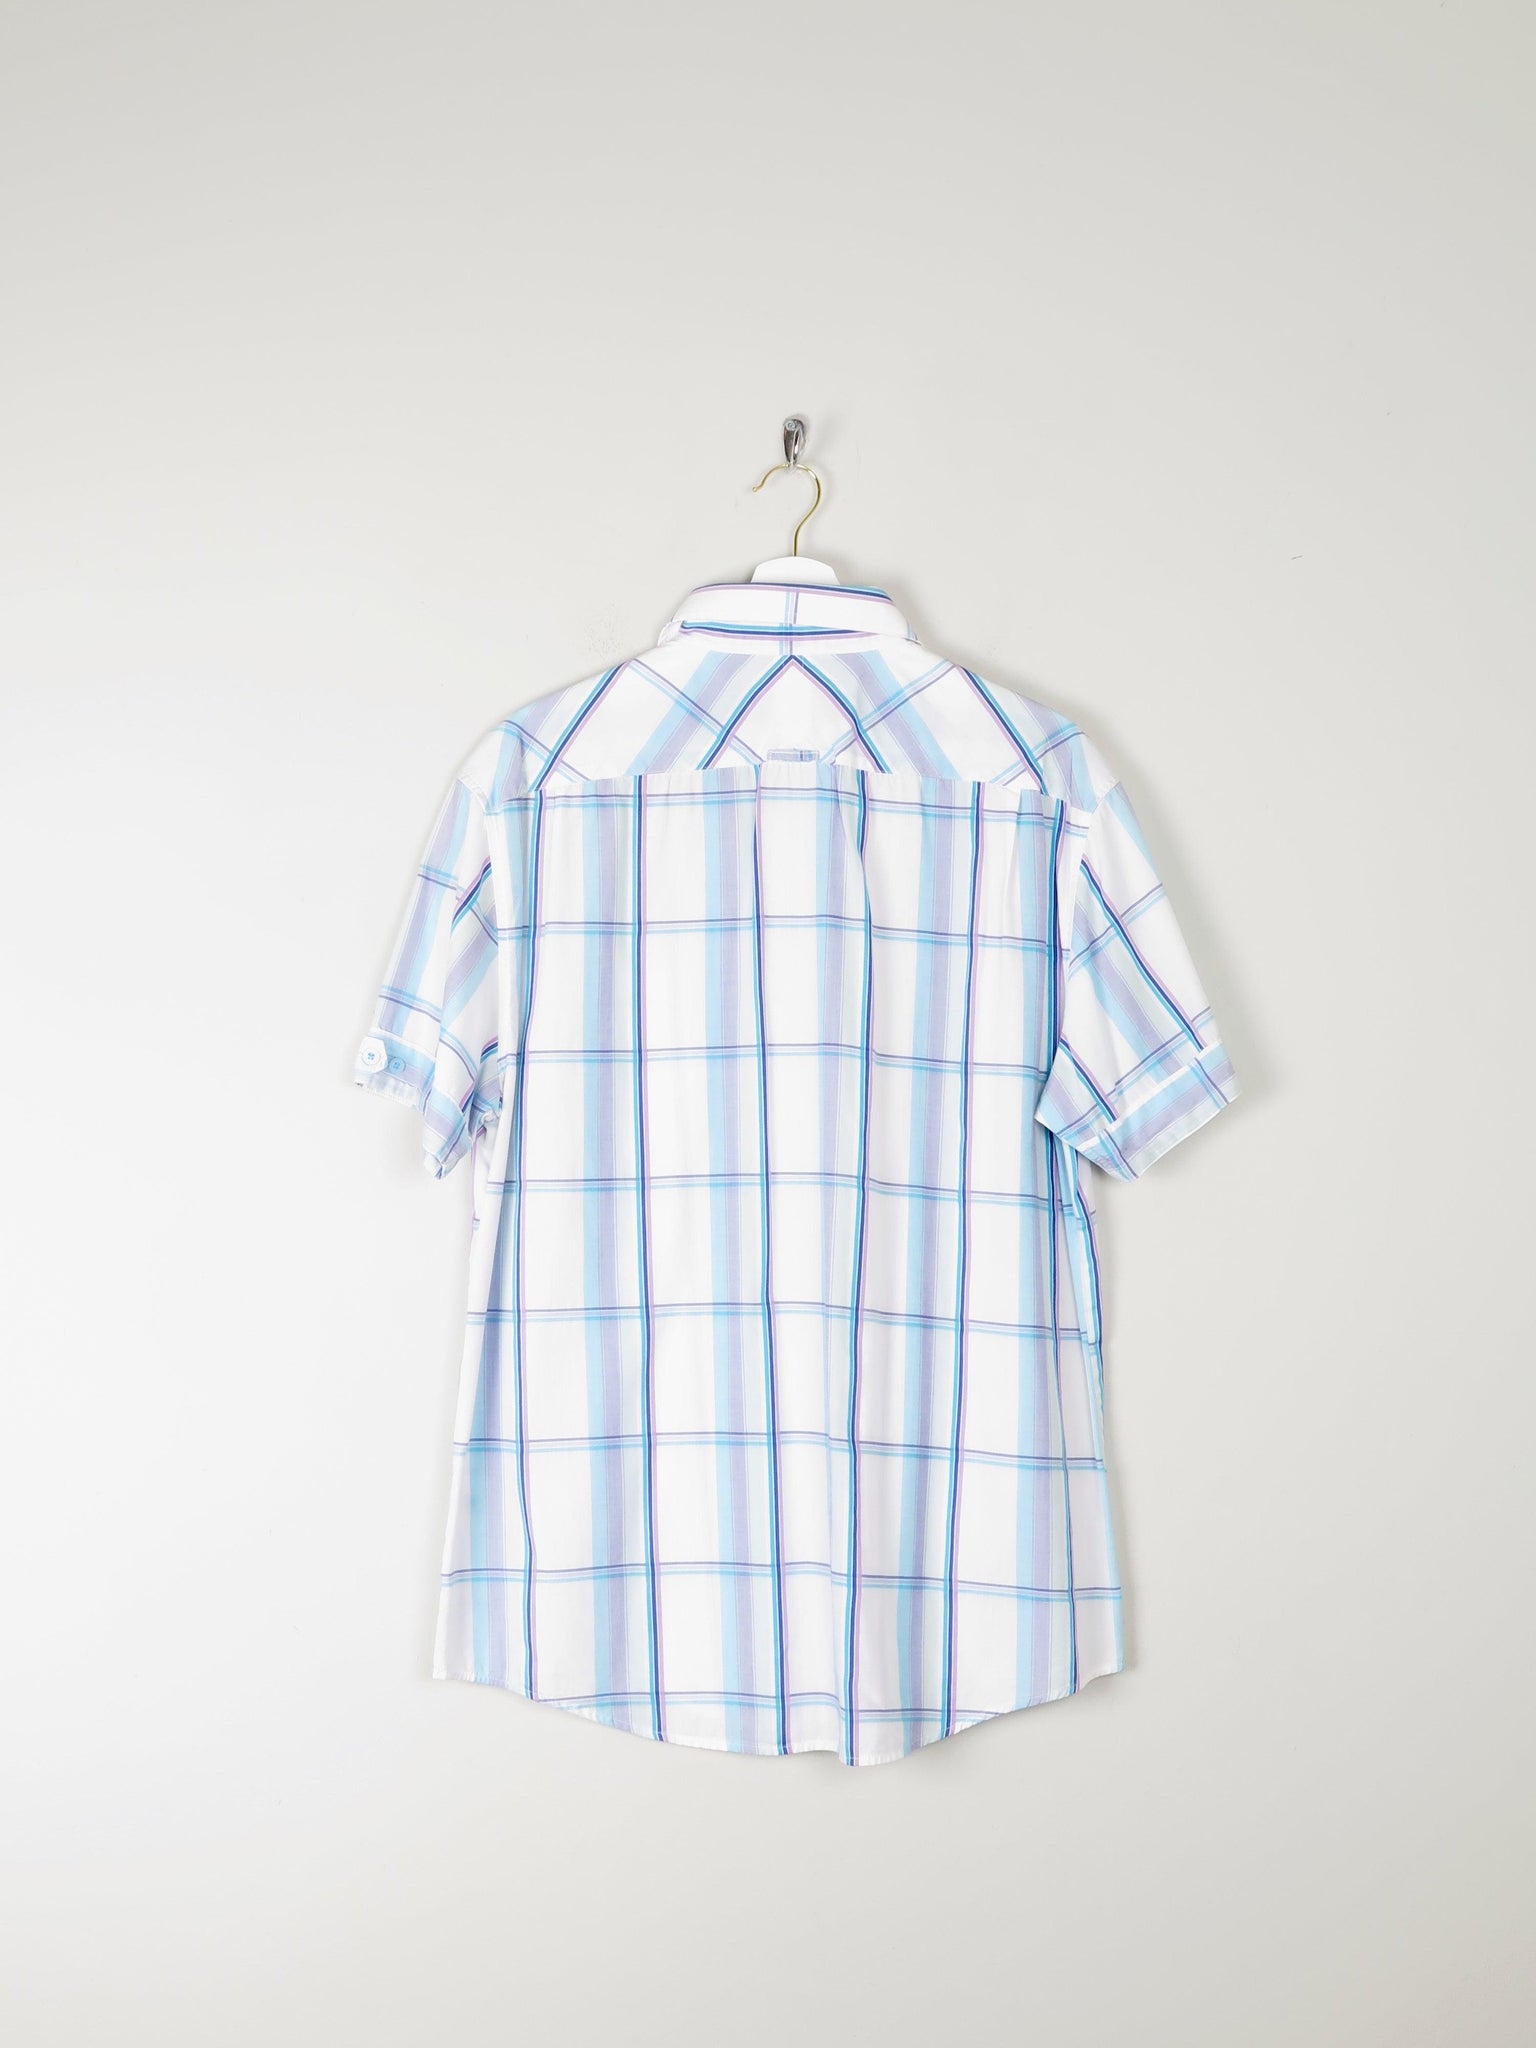 Men's White Cotton Check Short Sleeve Ben Sherman Shirt L - The Harlequin